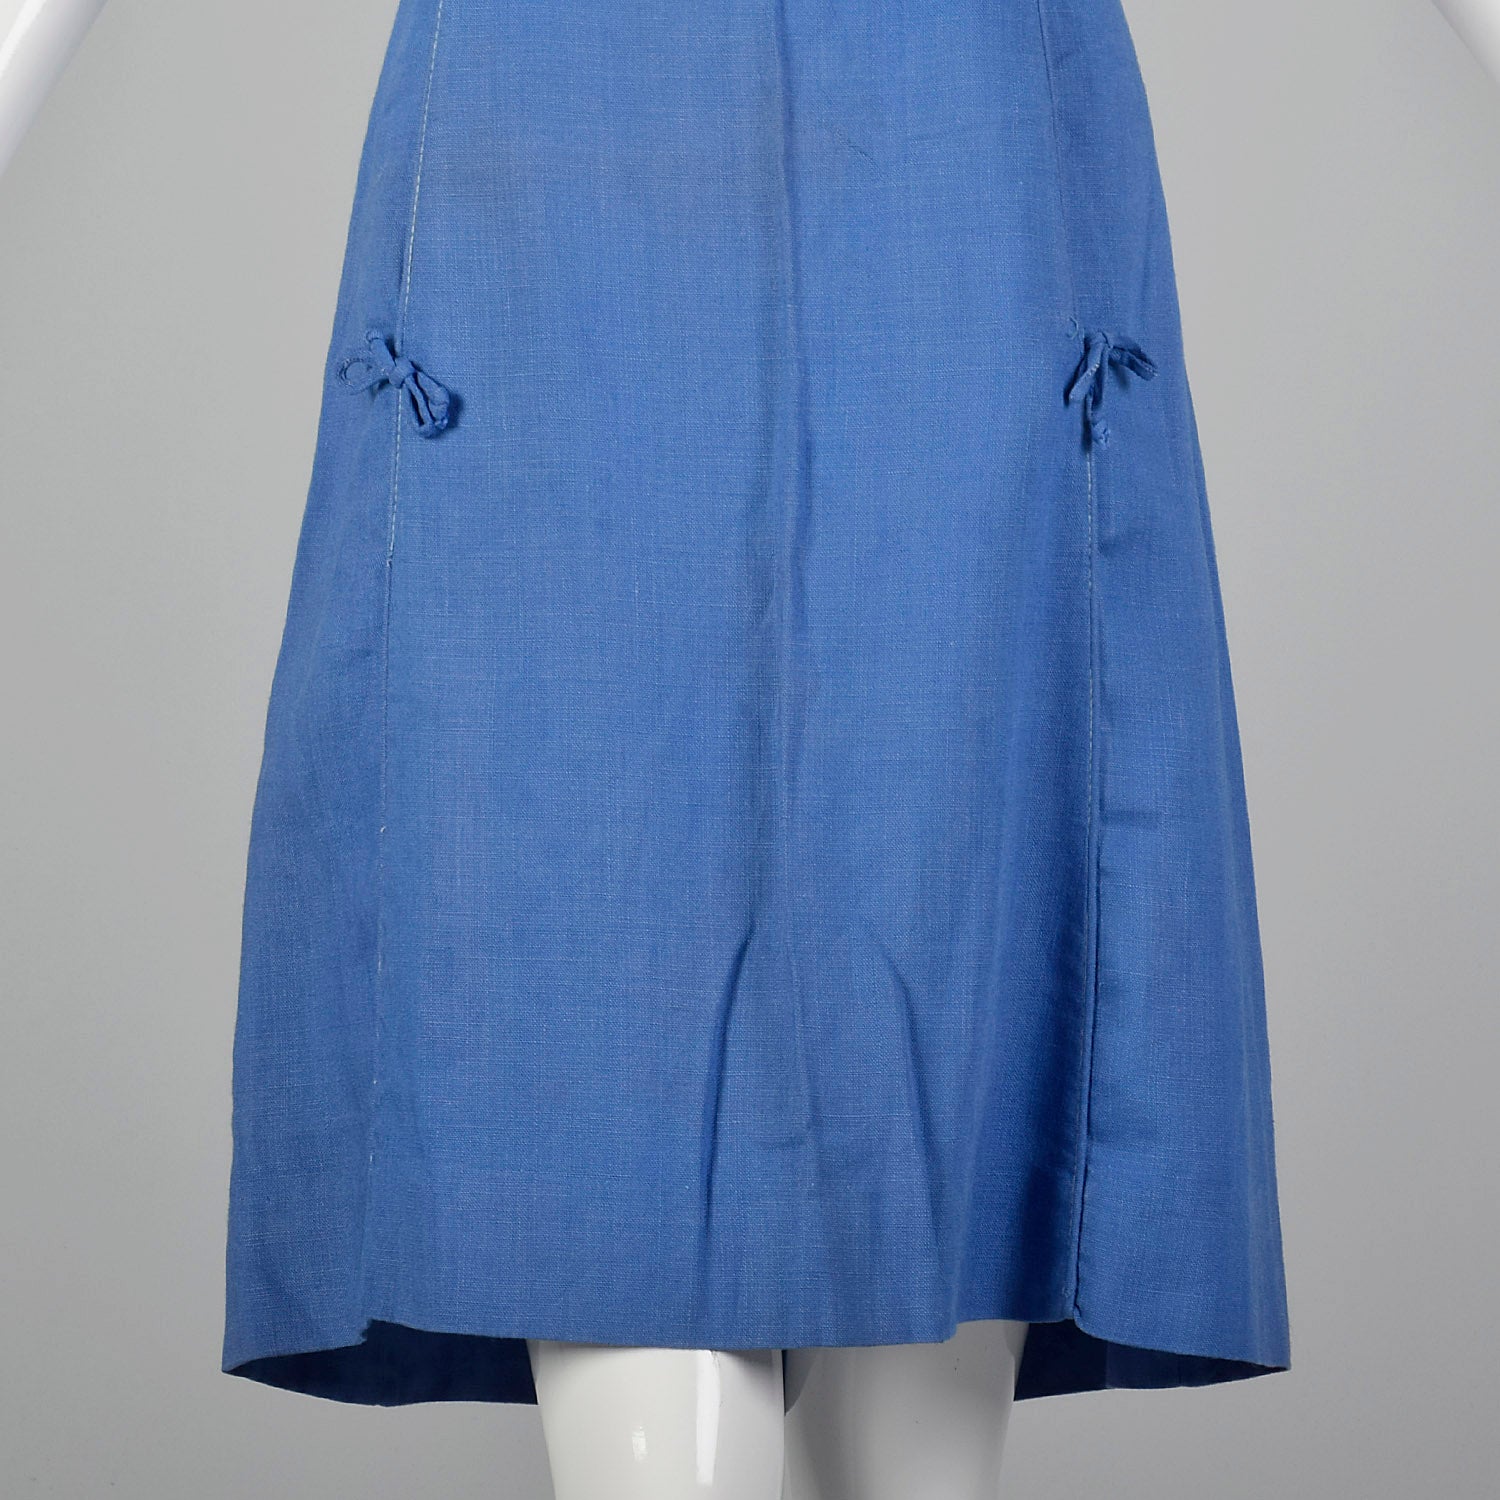 XS 1960s Blue Shift Dress